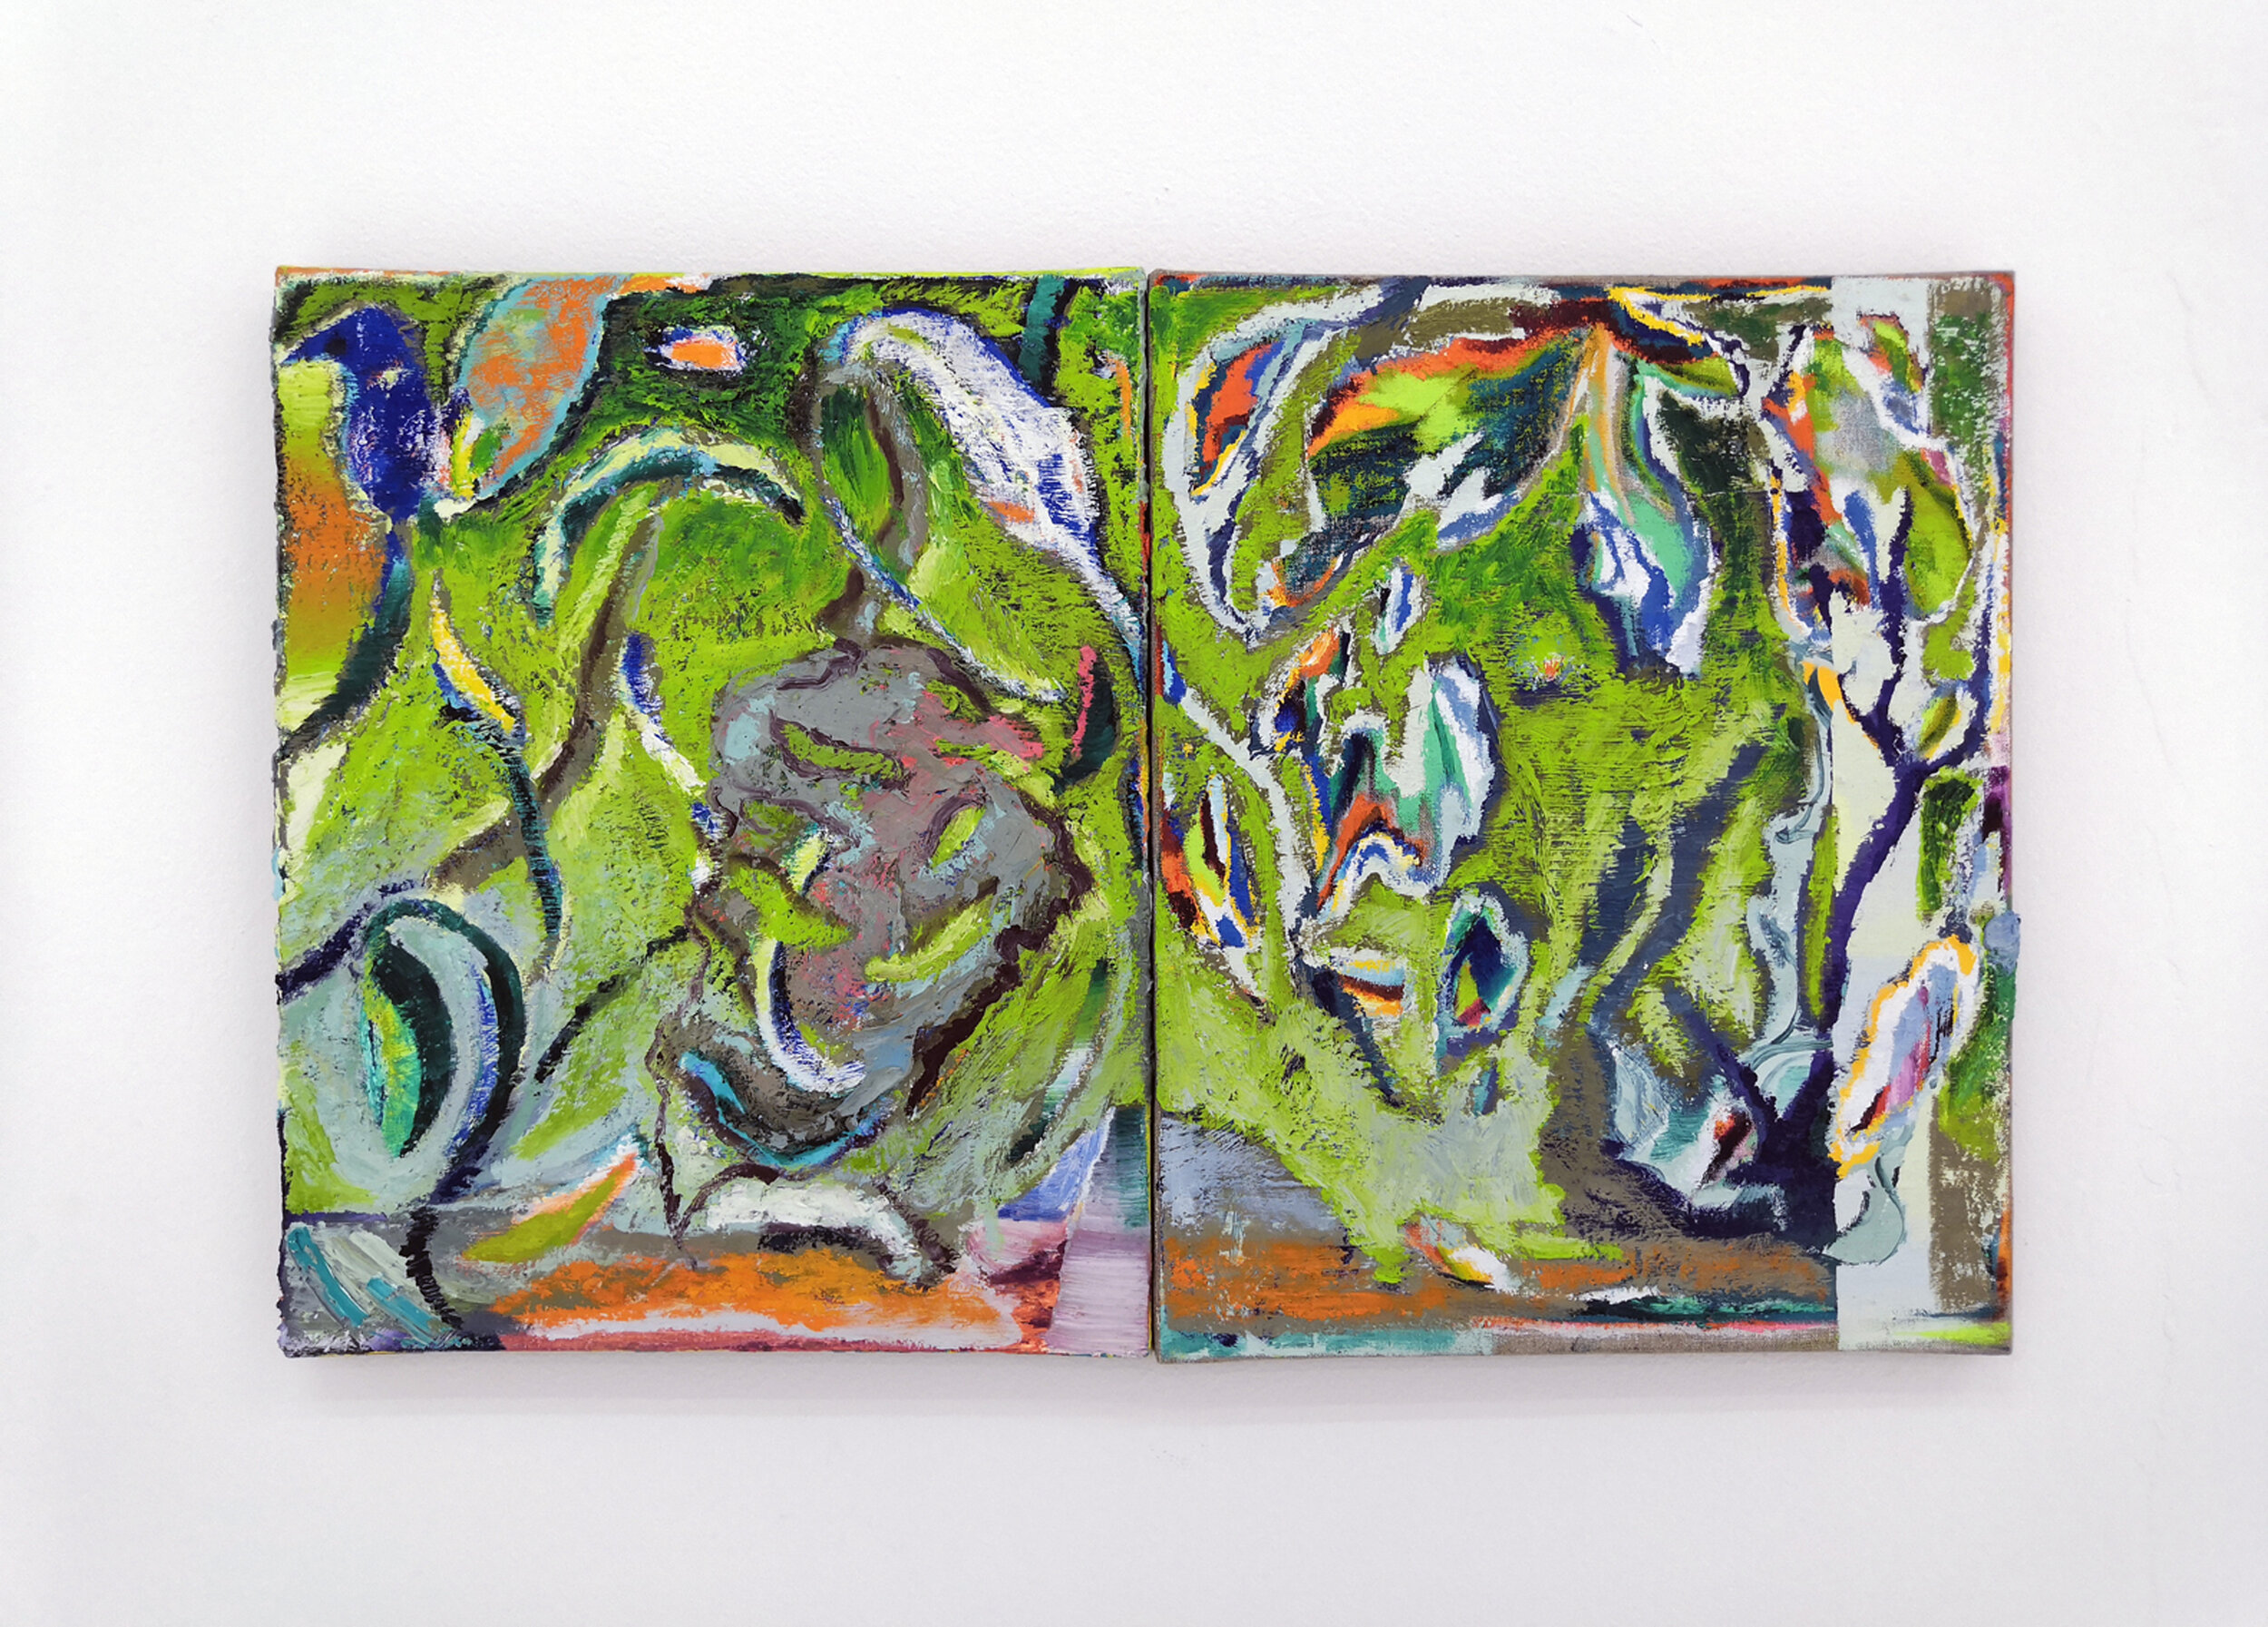   Anotaciones para un paisaje  (diptych), 2020-21 / oil on linen / 50 x 80 cm (two panels of 50 x 40 cm each) / ©Courtesy of Galería Karen Huber 